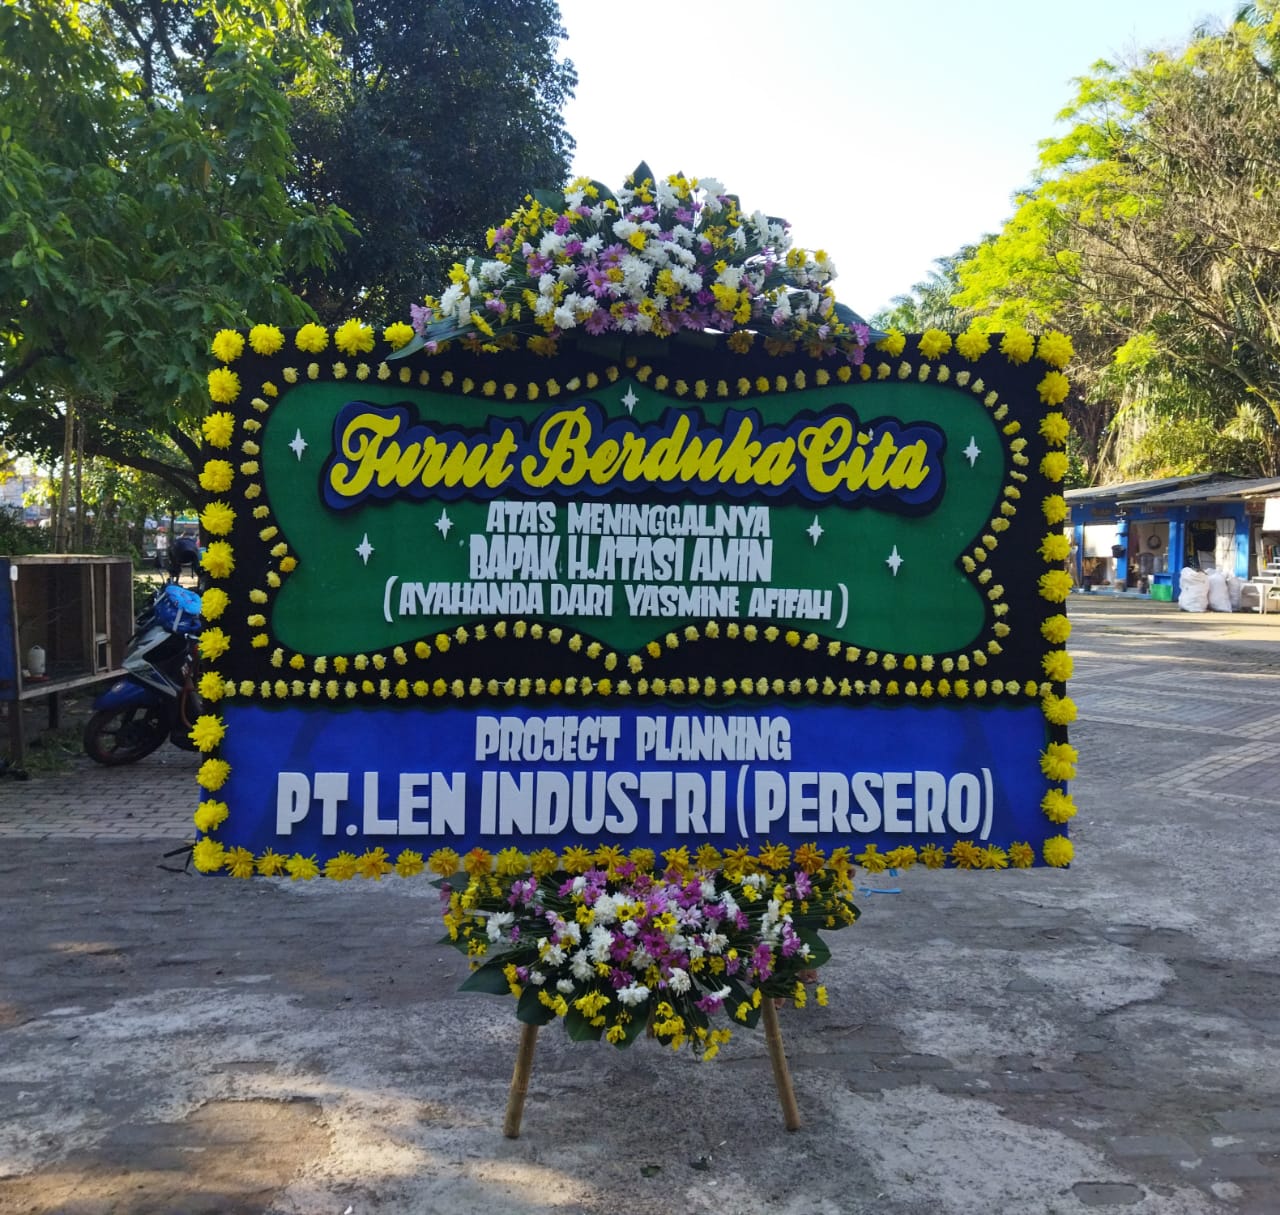 Jual Bunga Papan di Yogyakarta